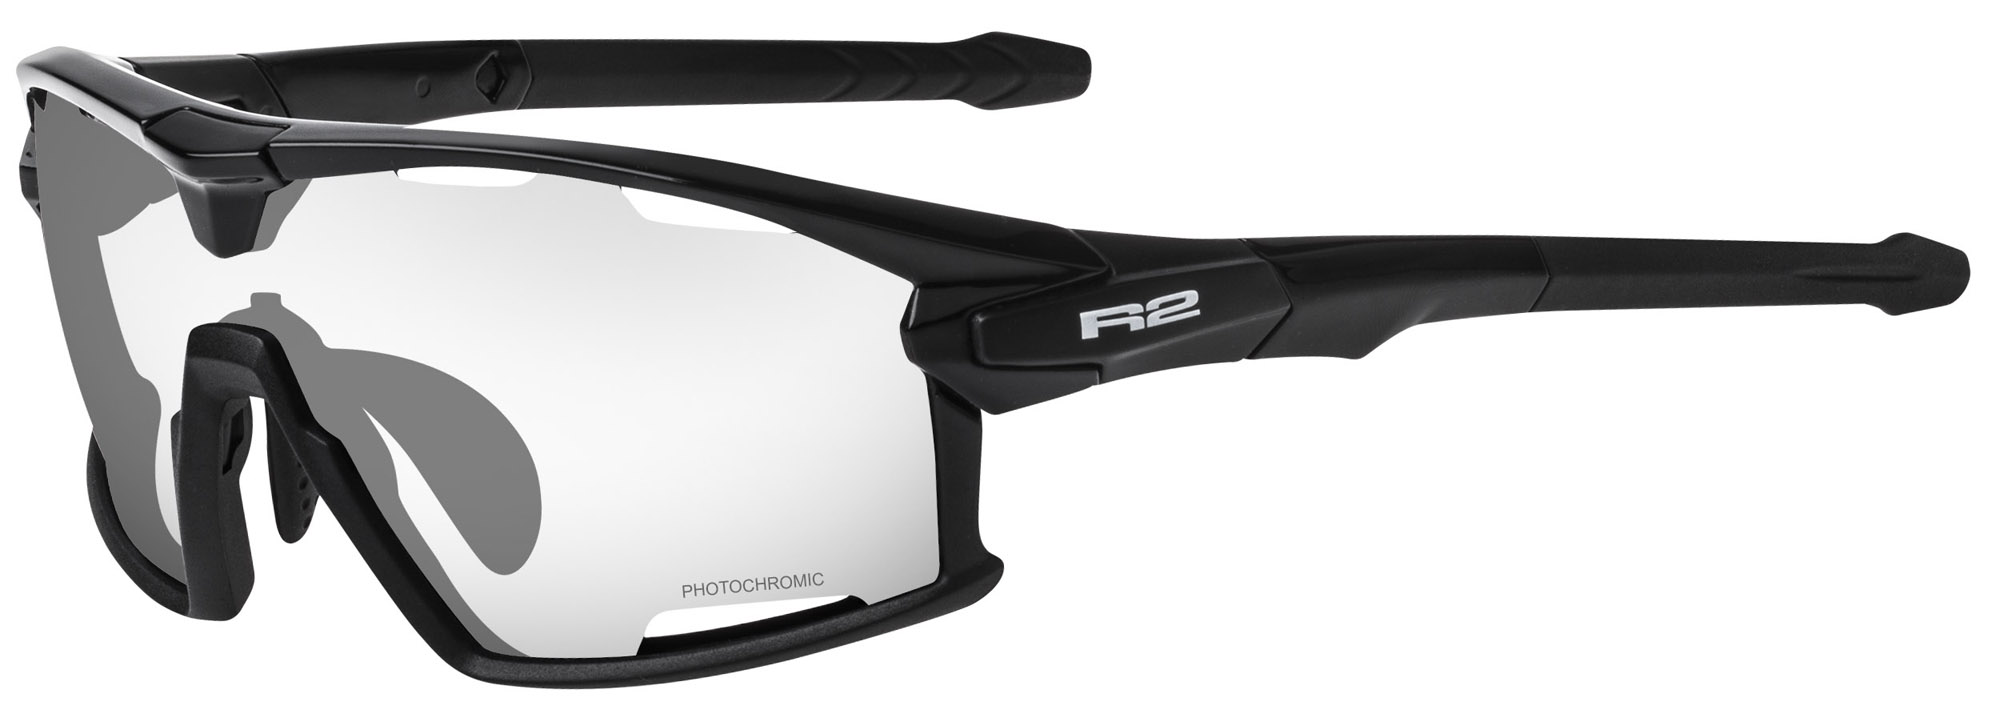 Photochromatic sunglasses  R2 ROCKET AT098I standard